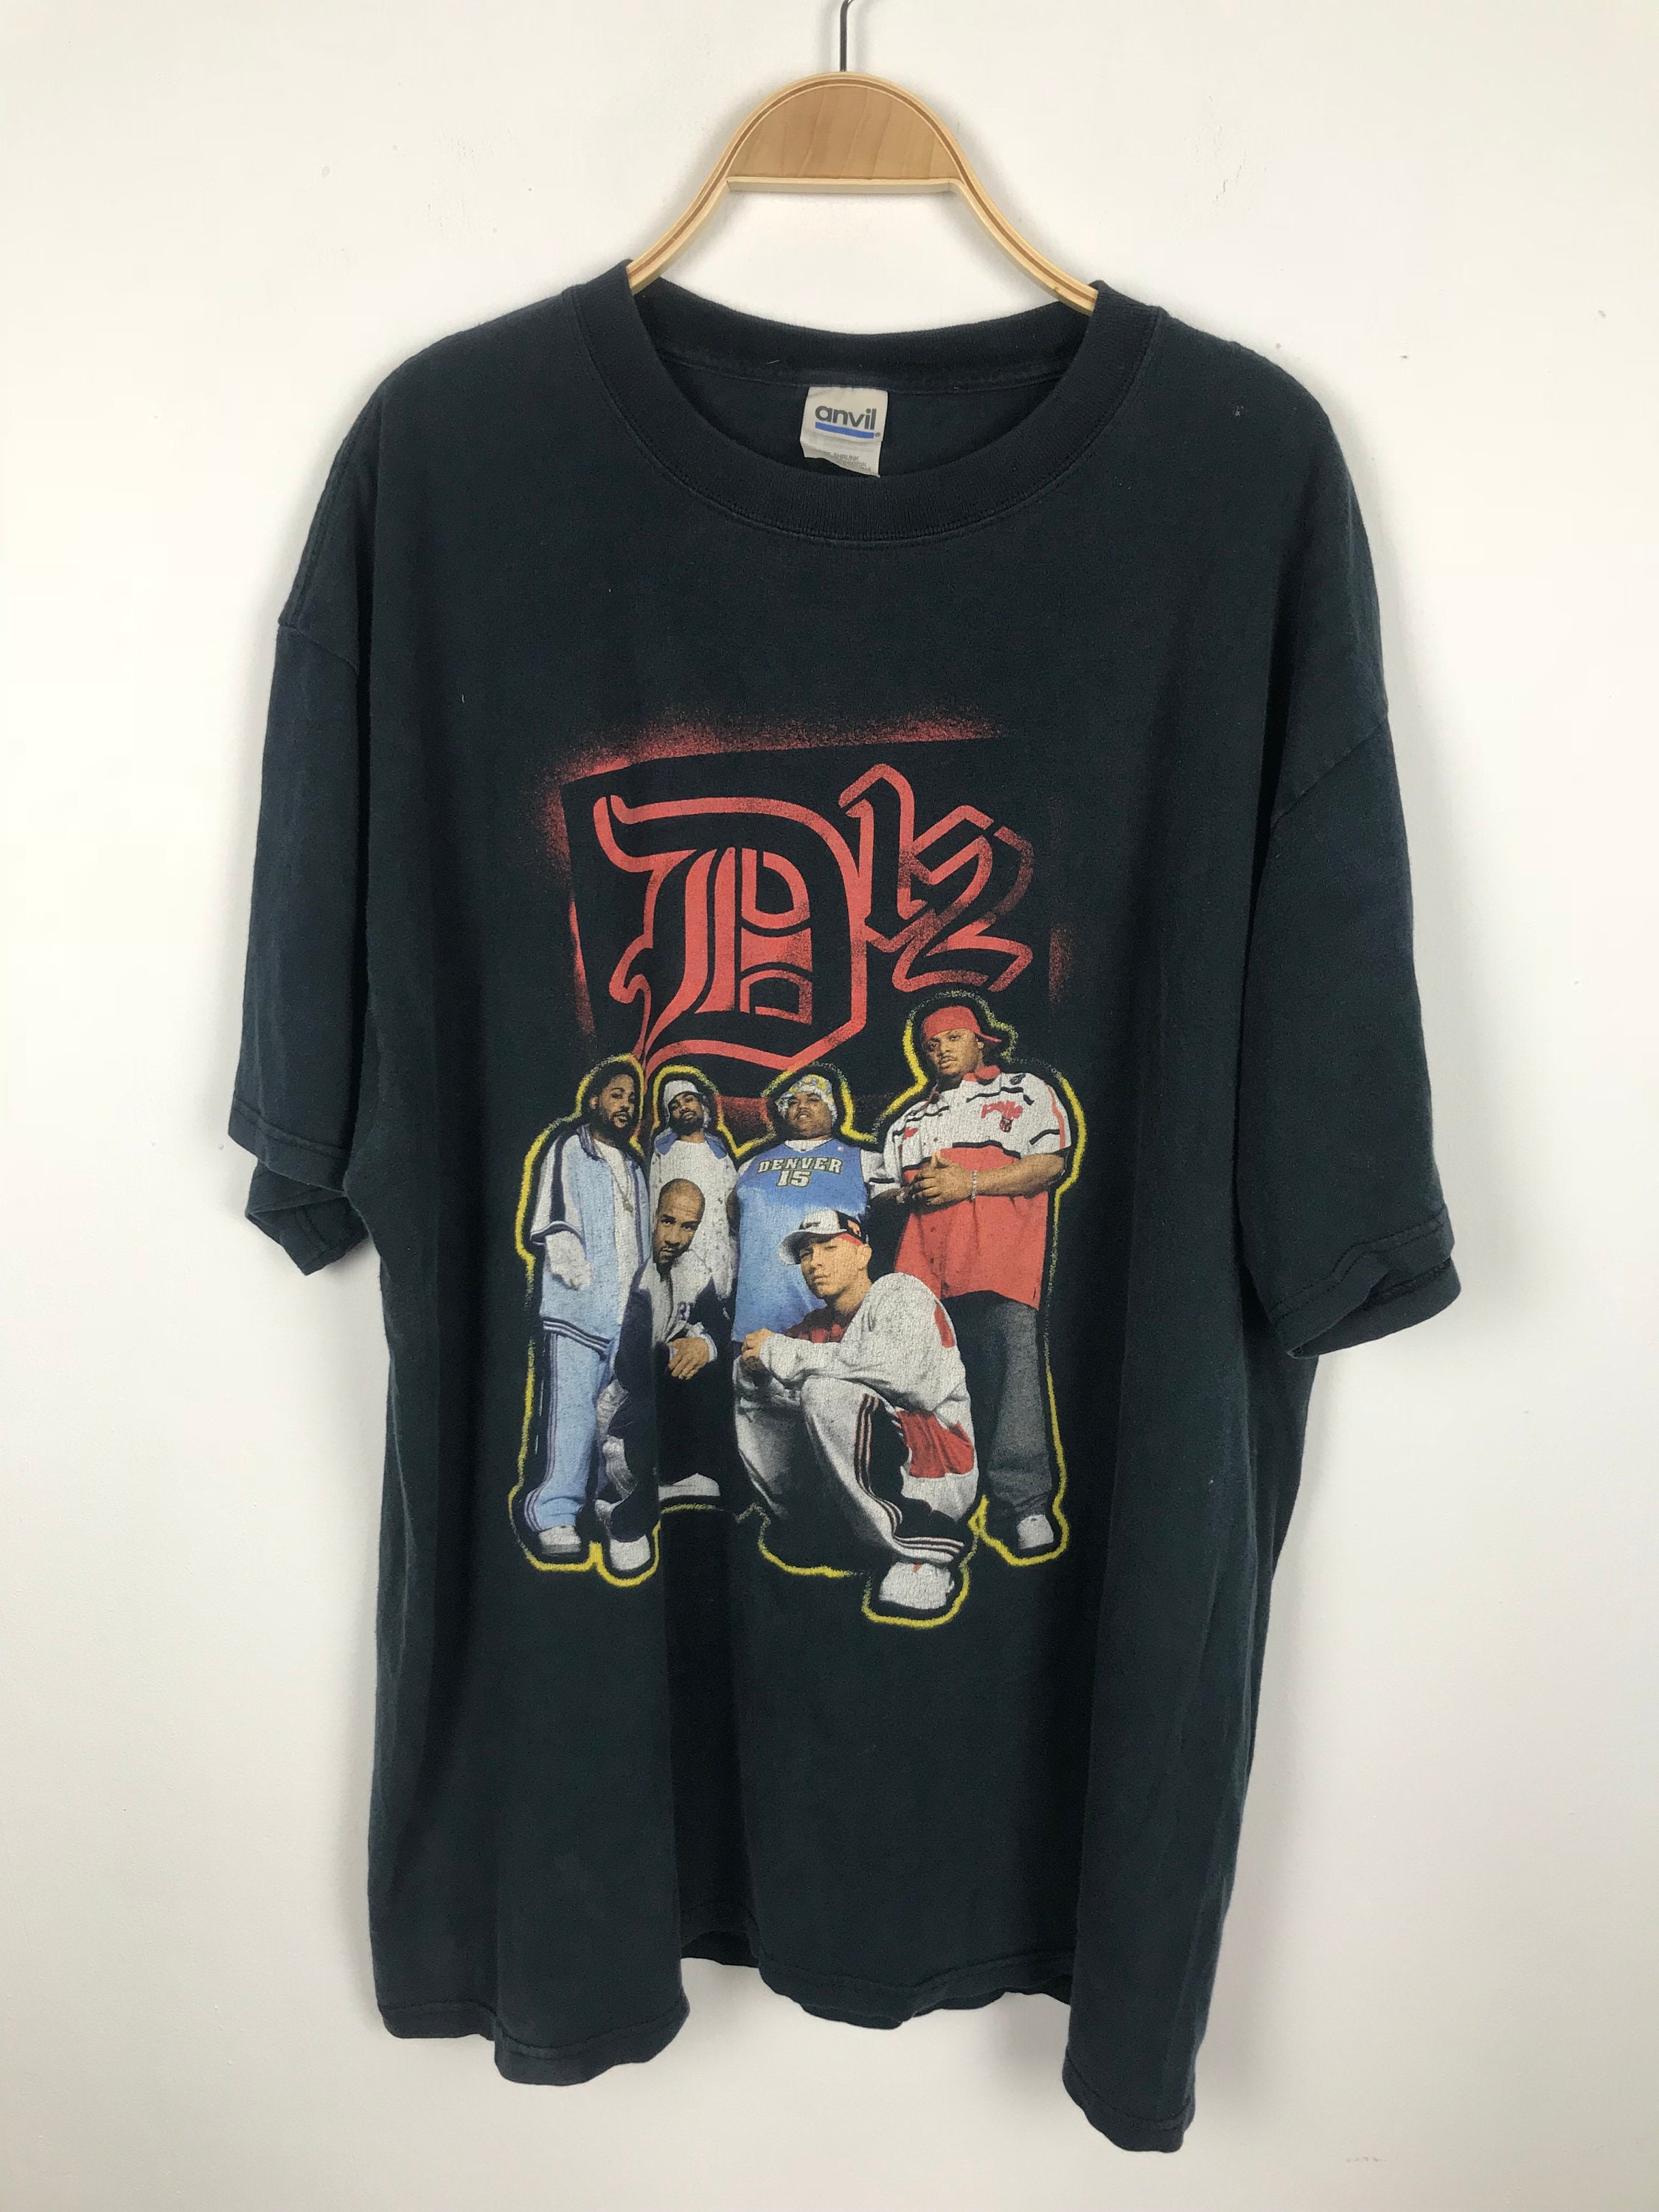 D12 announce 20th anniversary UK tour